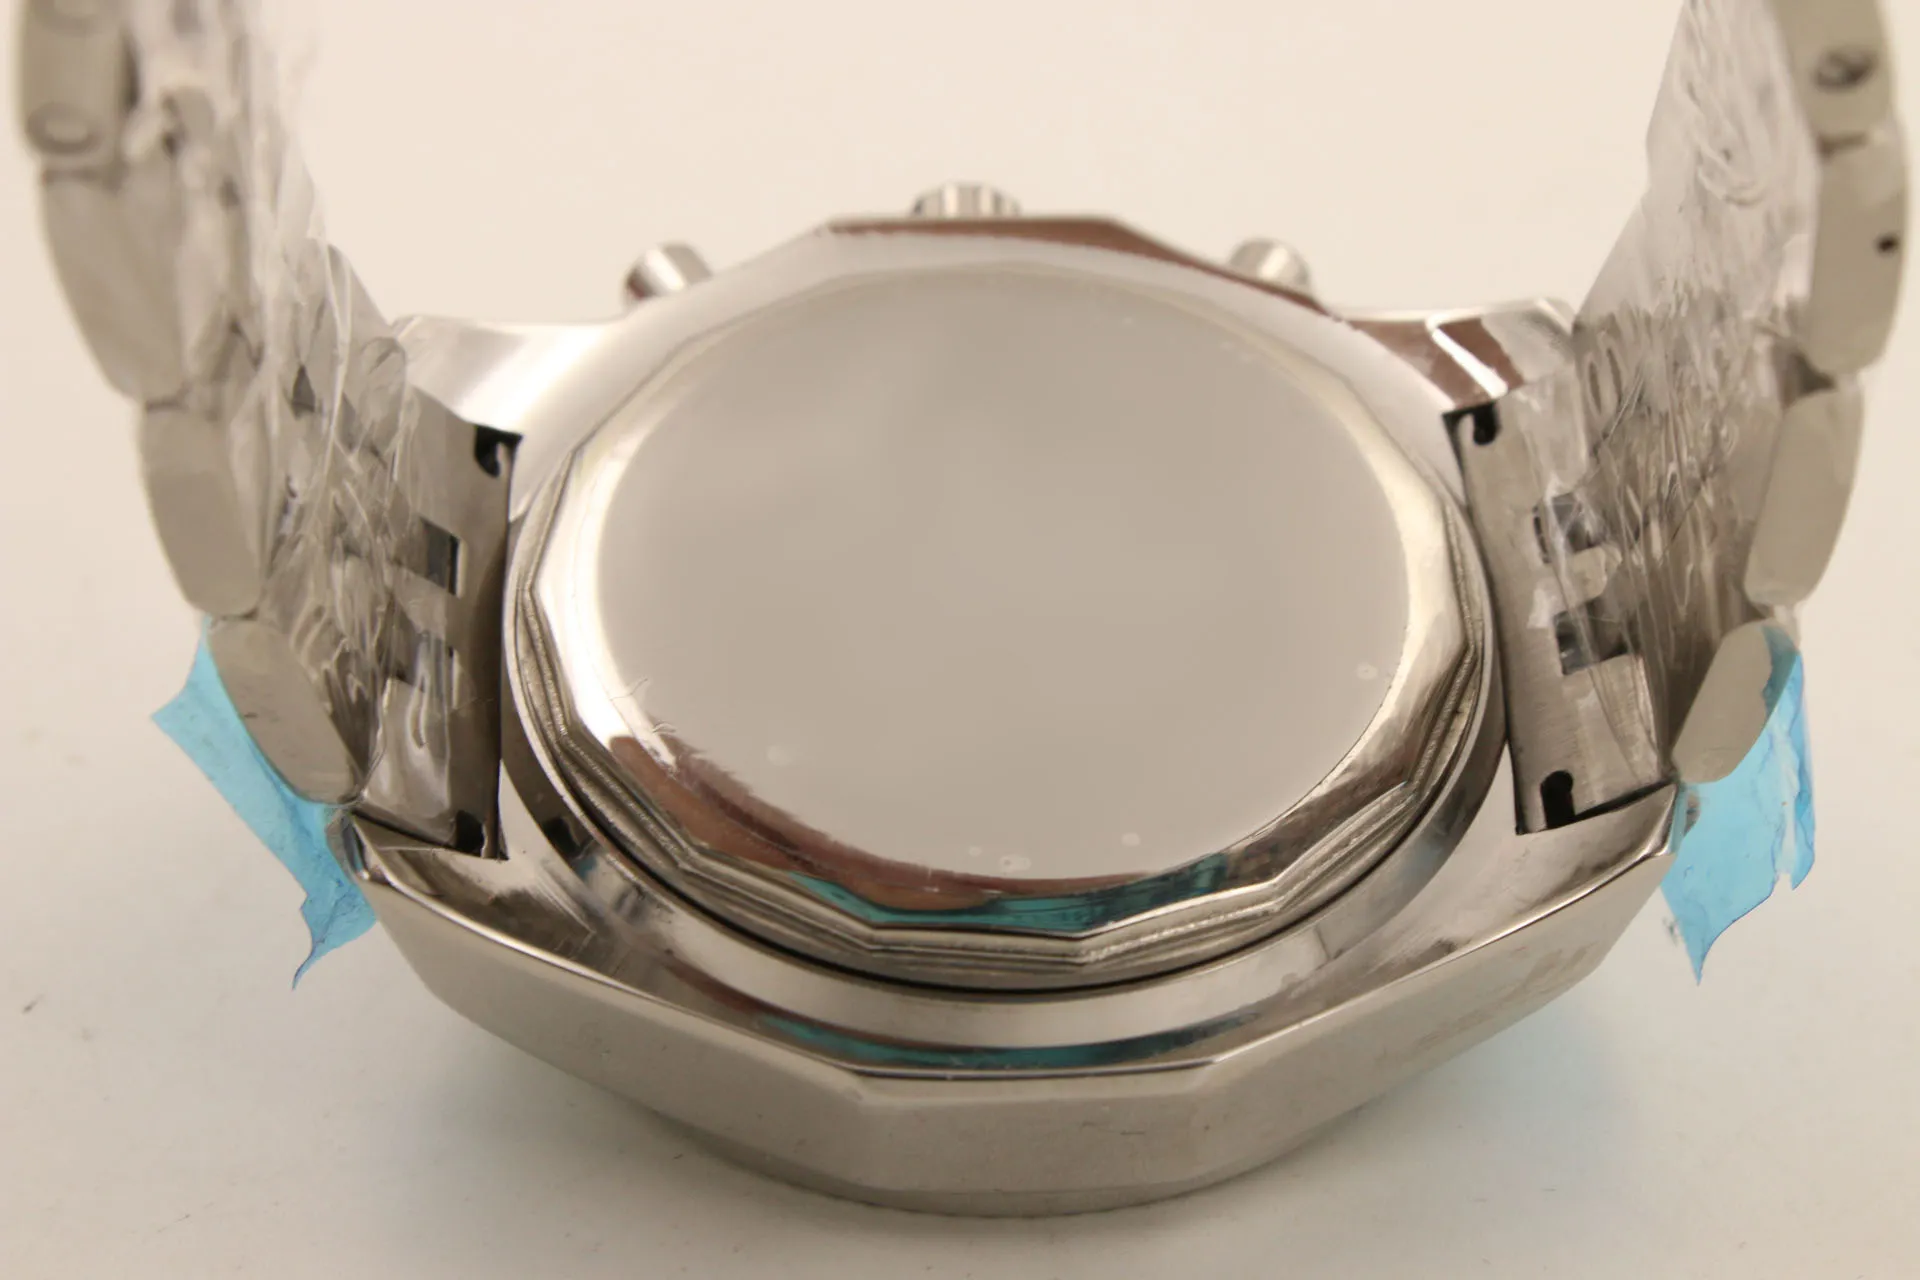 Especial Brel Automatic Watch Men Silve Case Black Dial Band Stainless Super Ocean Mechanical Casaul Watch Montre Homme2356